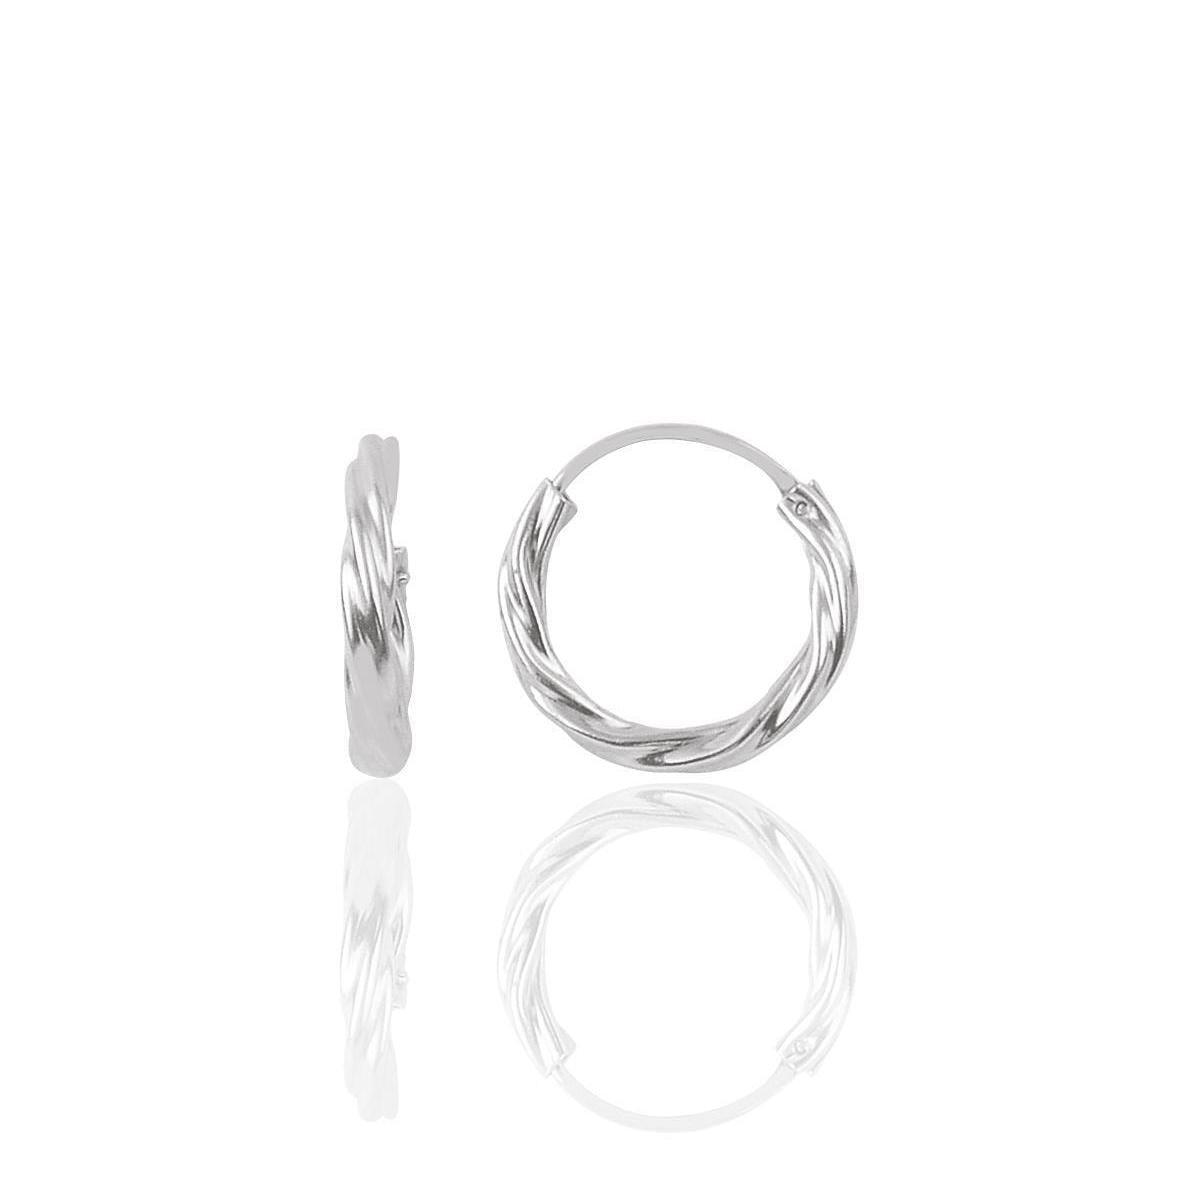 Twisted Hoop Earrings • Twisted Silver Hoop Earrings • Gift For Wife - Trending Silver Gifts